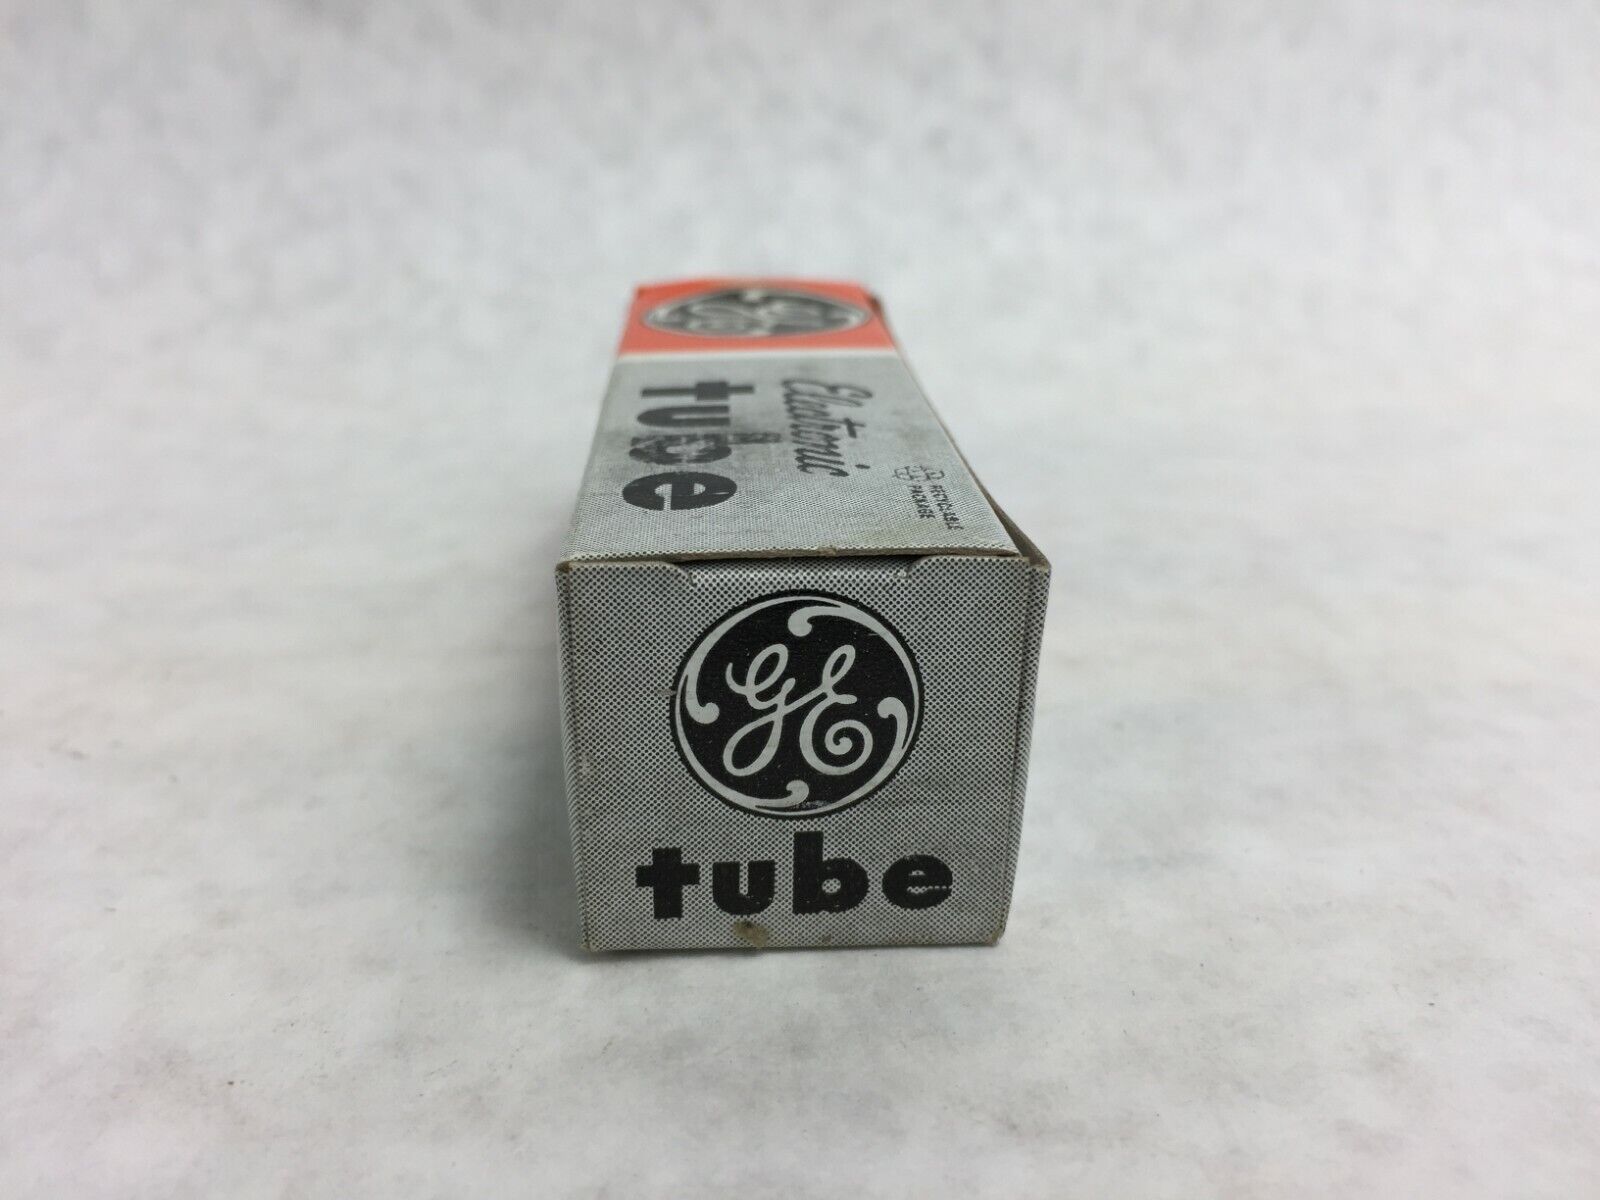 GE Electronic Tube 12JQ6